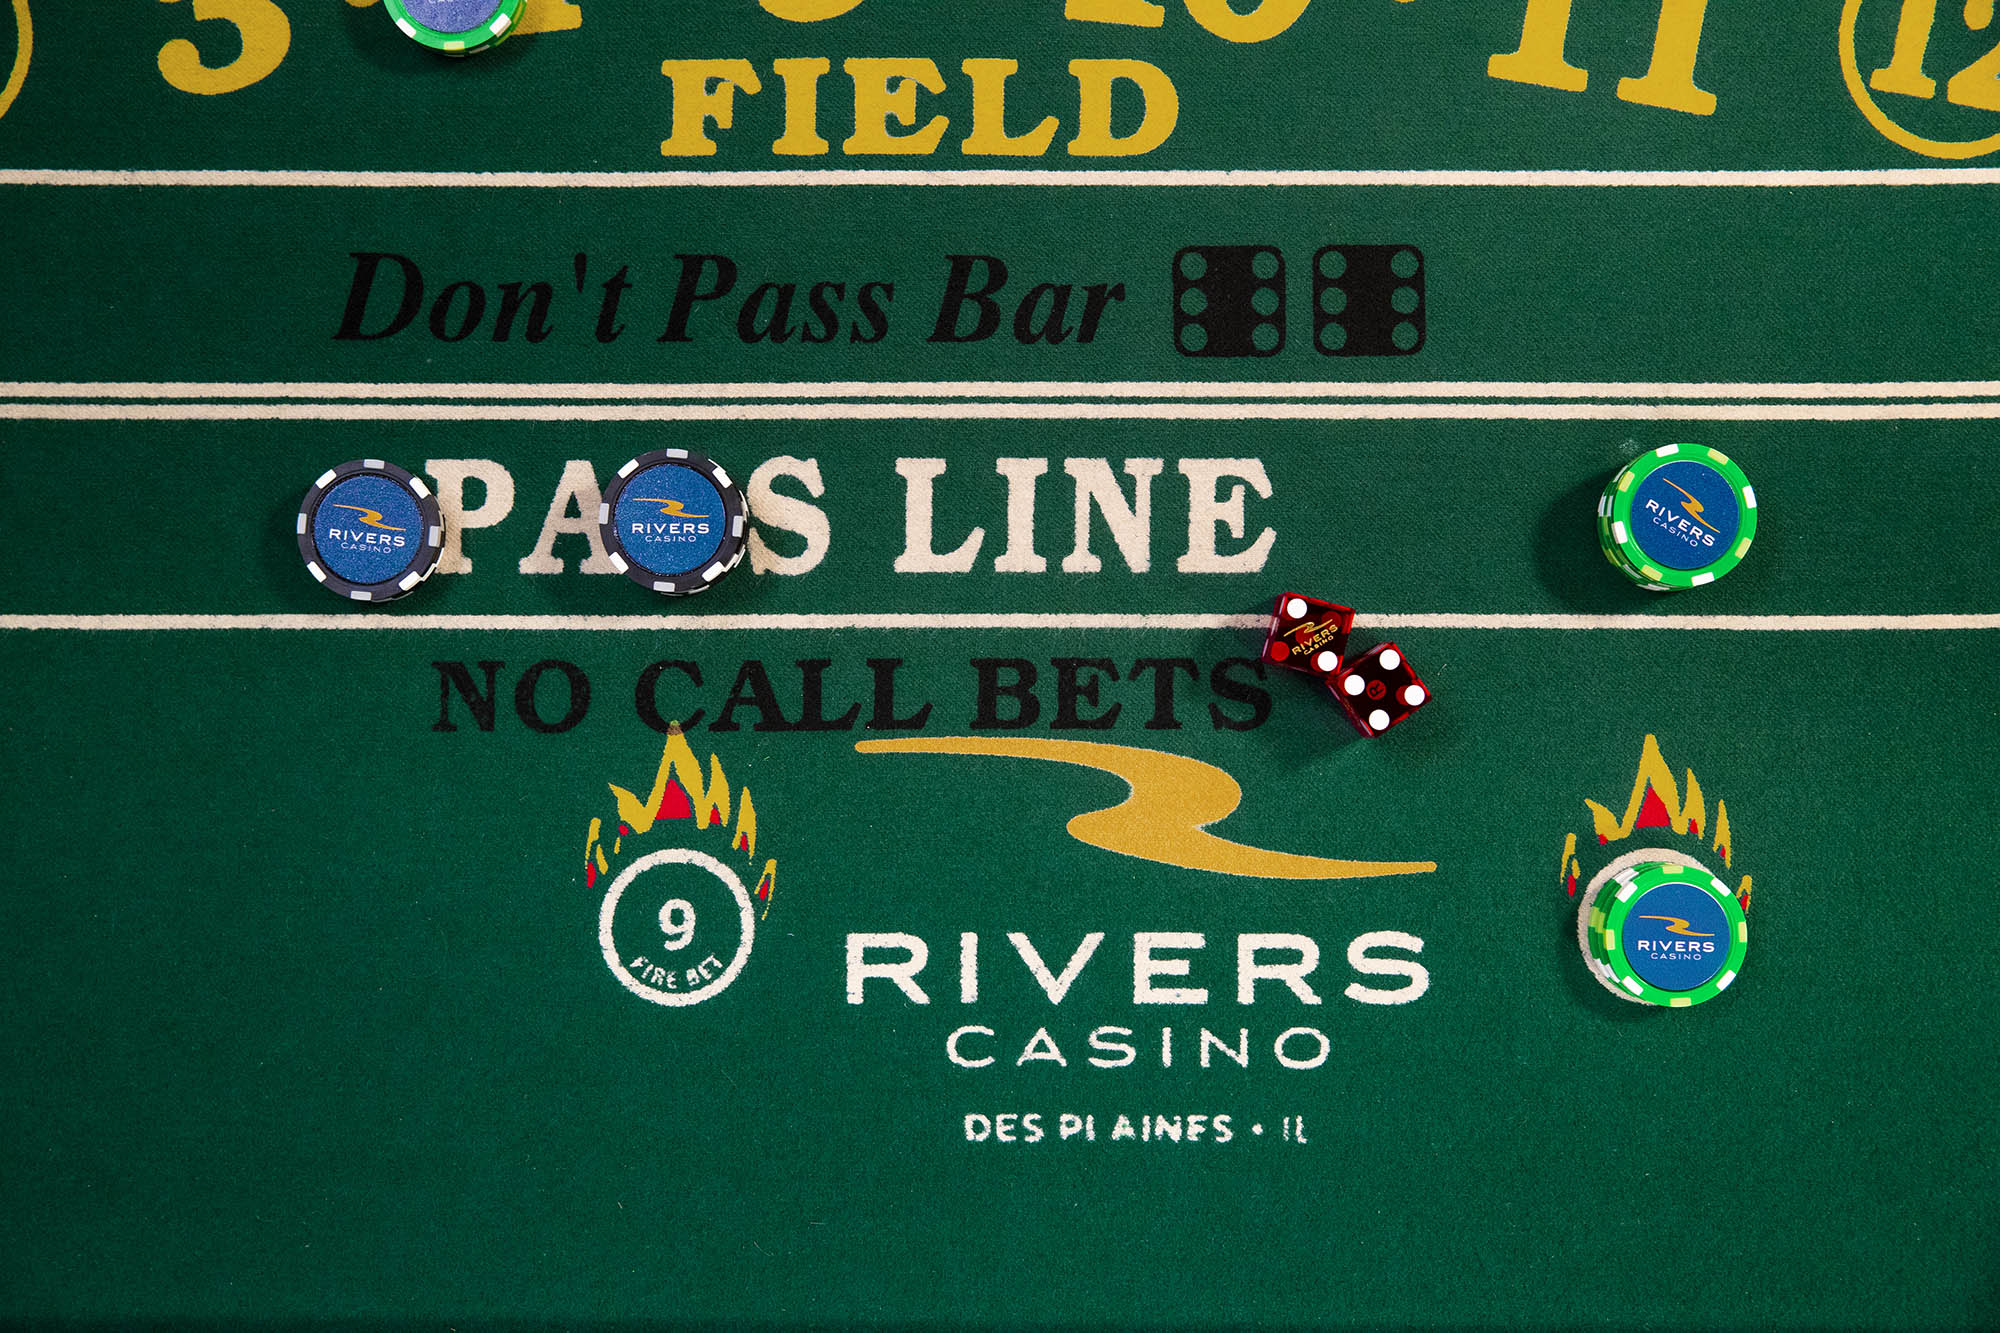 rivers casino seeking money from des plaines